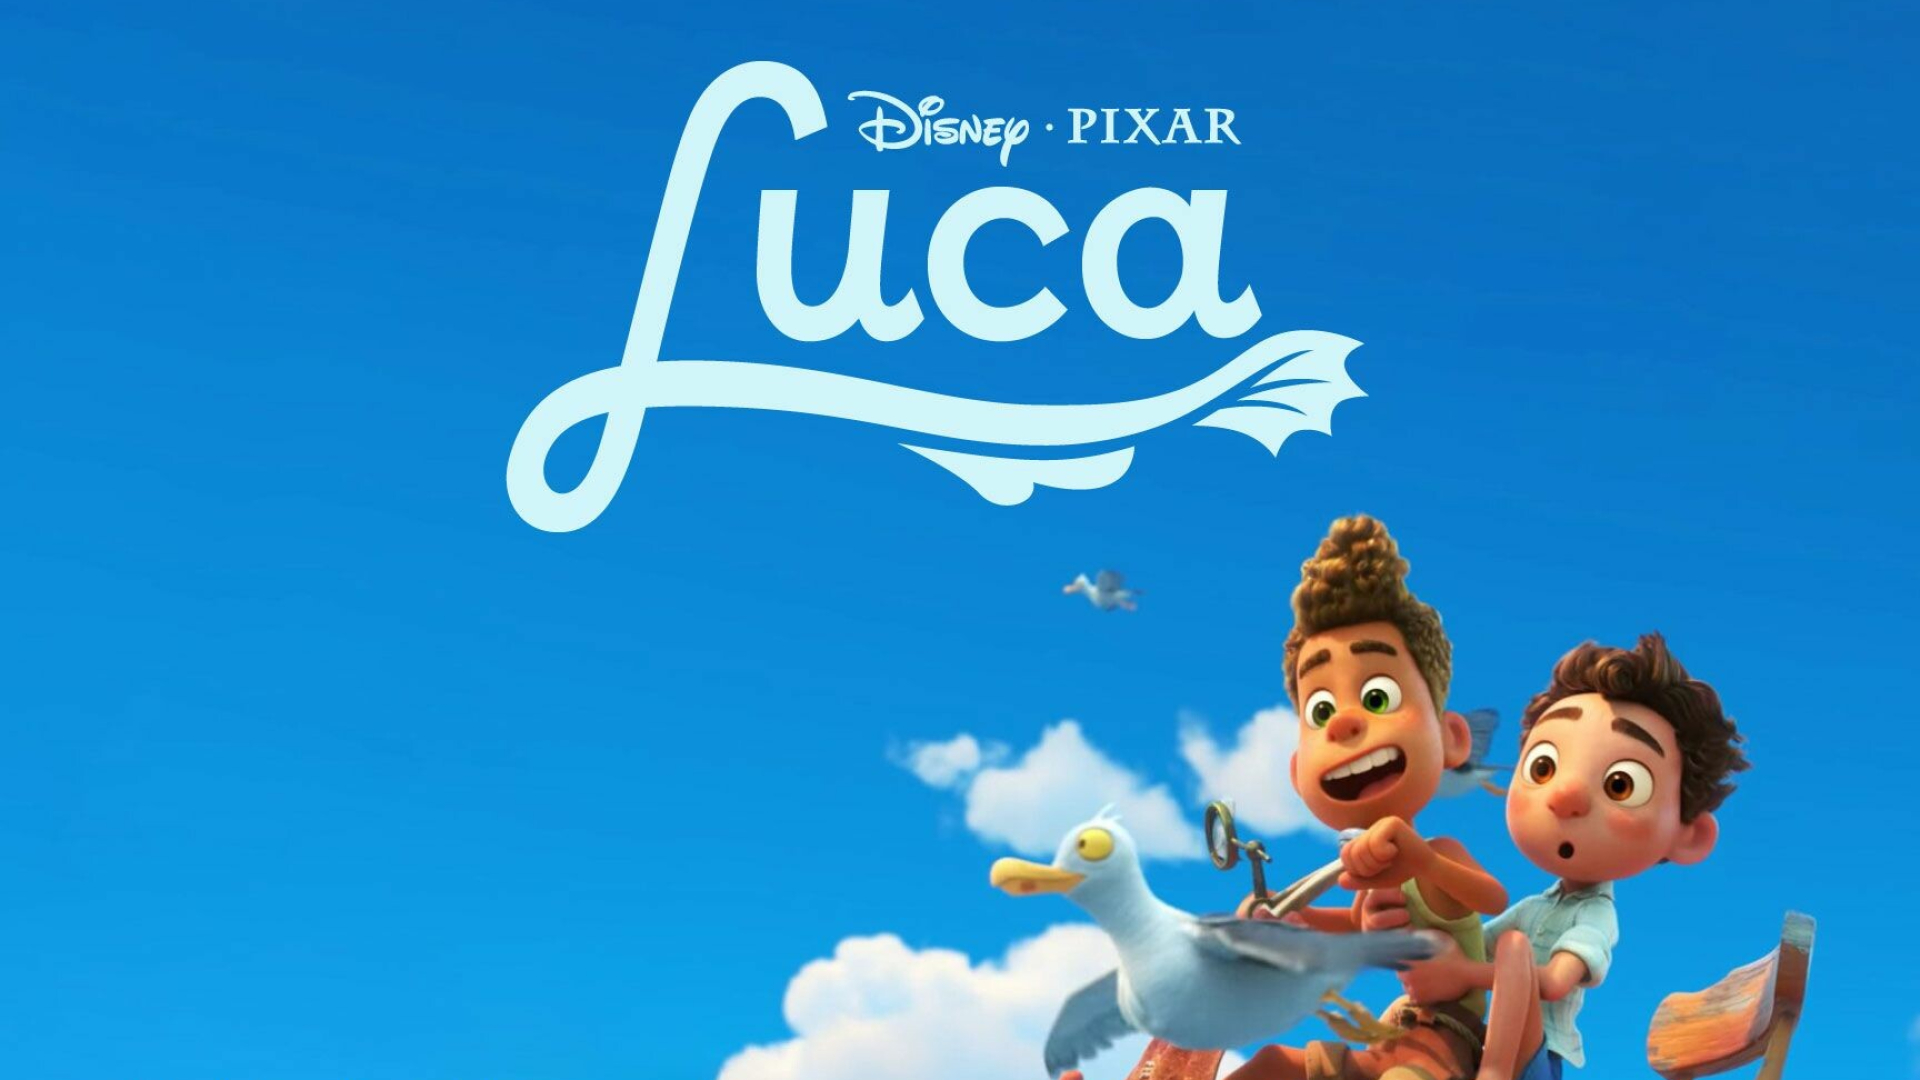 Luca: Enrico Casarosa's first Pixar film, Disney. 1920x1080 Full HD Wallpaper.